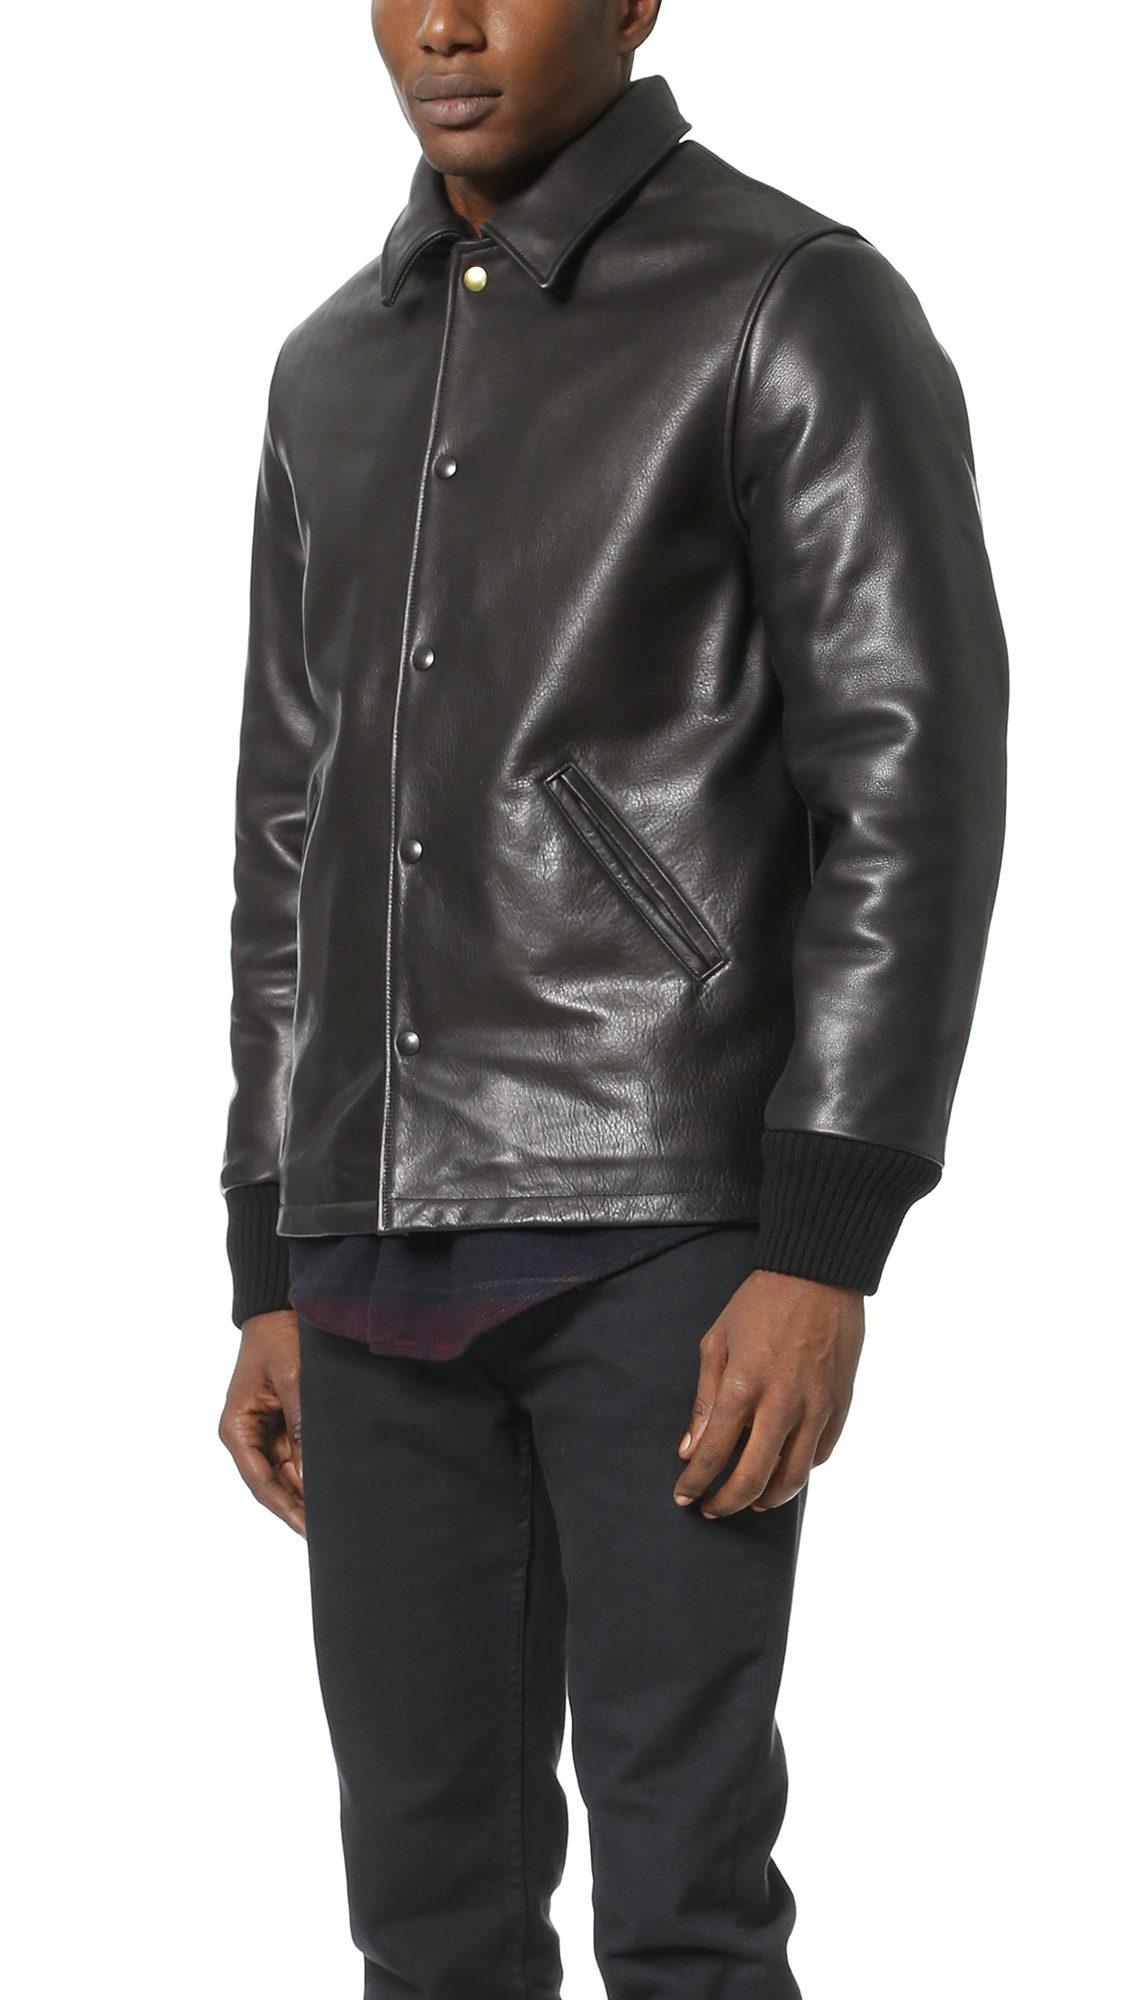 Lyst - Golden Bear Leather Coach Jacket in Black for Men